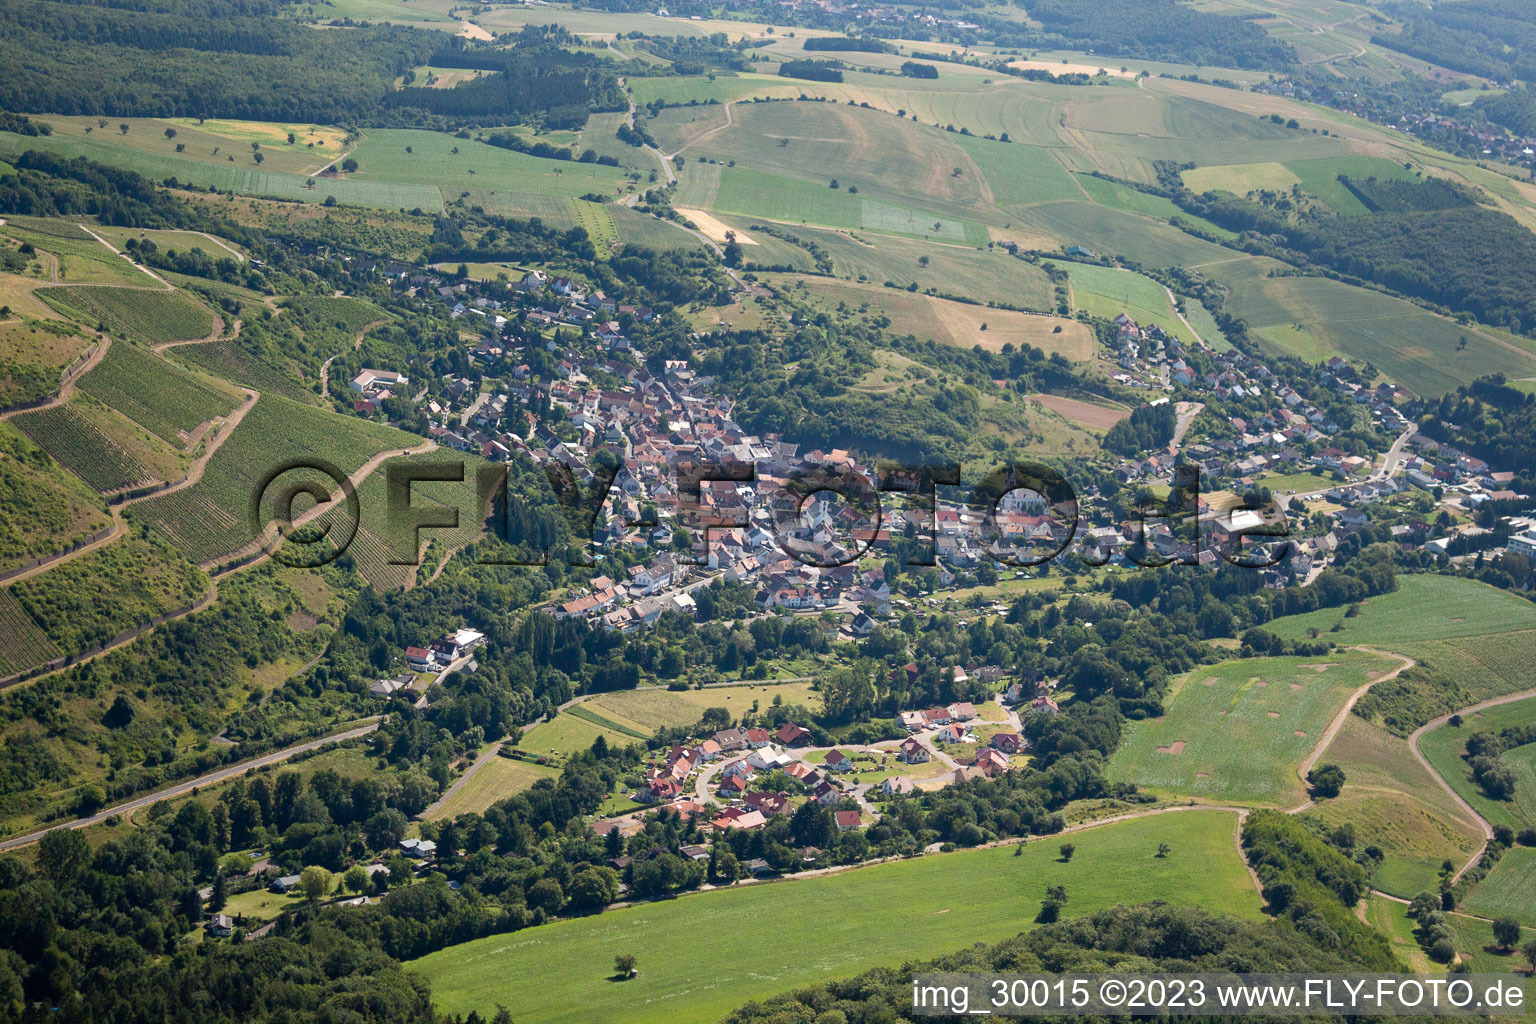 Aerial view of Bockenau in the state Rhineland-Palatinate, Germany